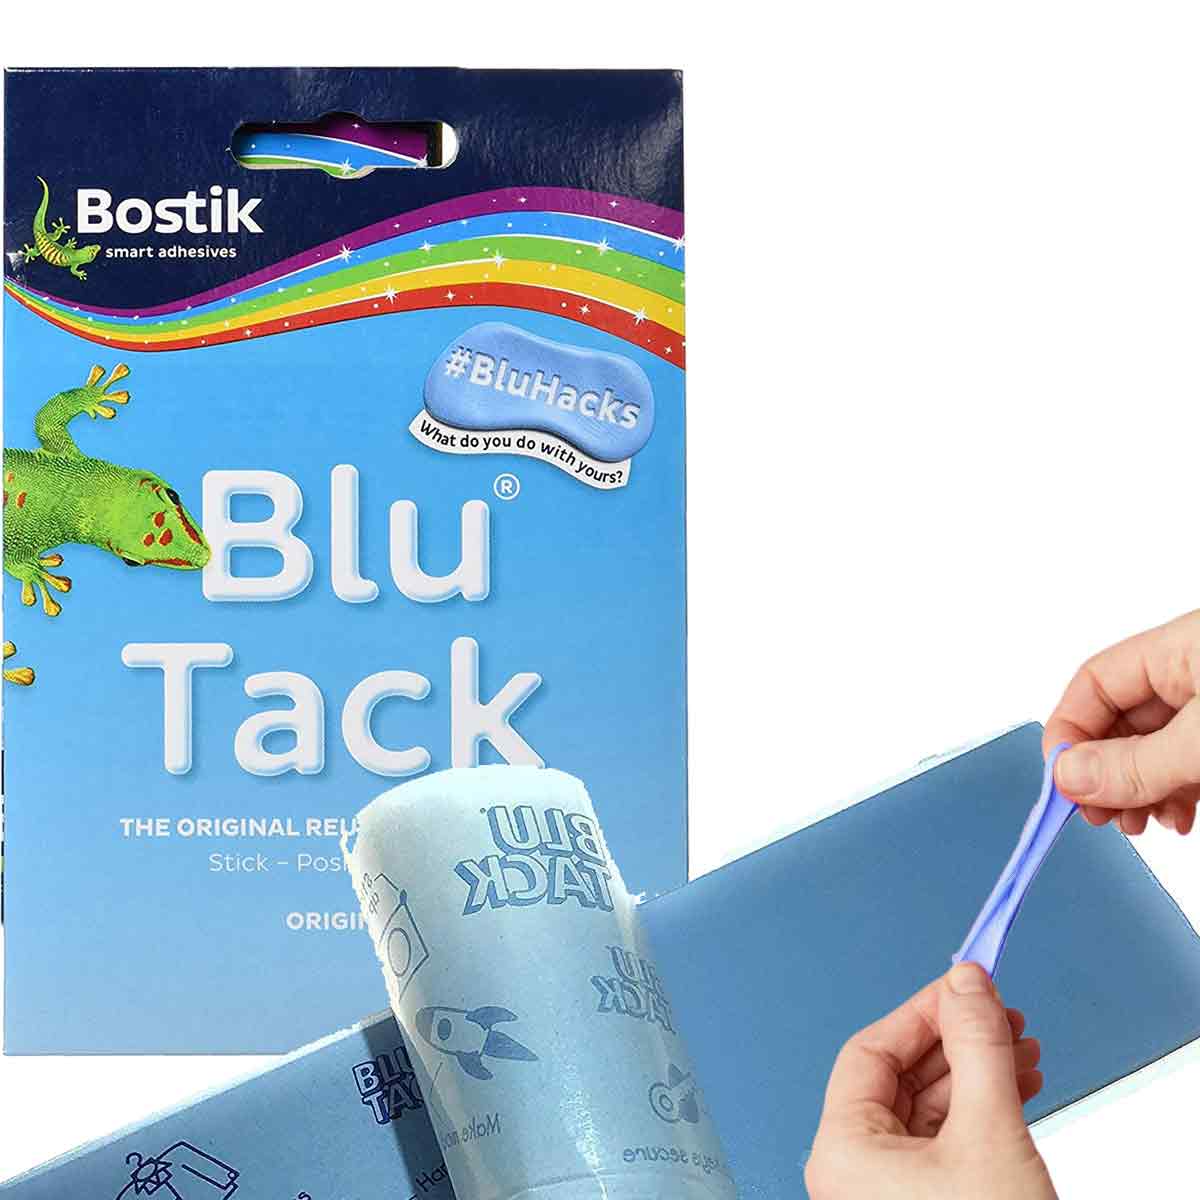 Tack-it Stick Tack Product Photography Adhesive